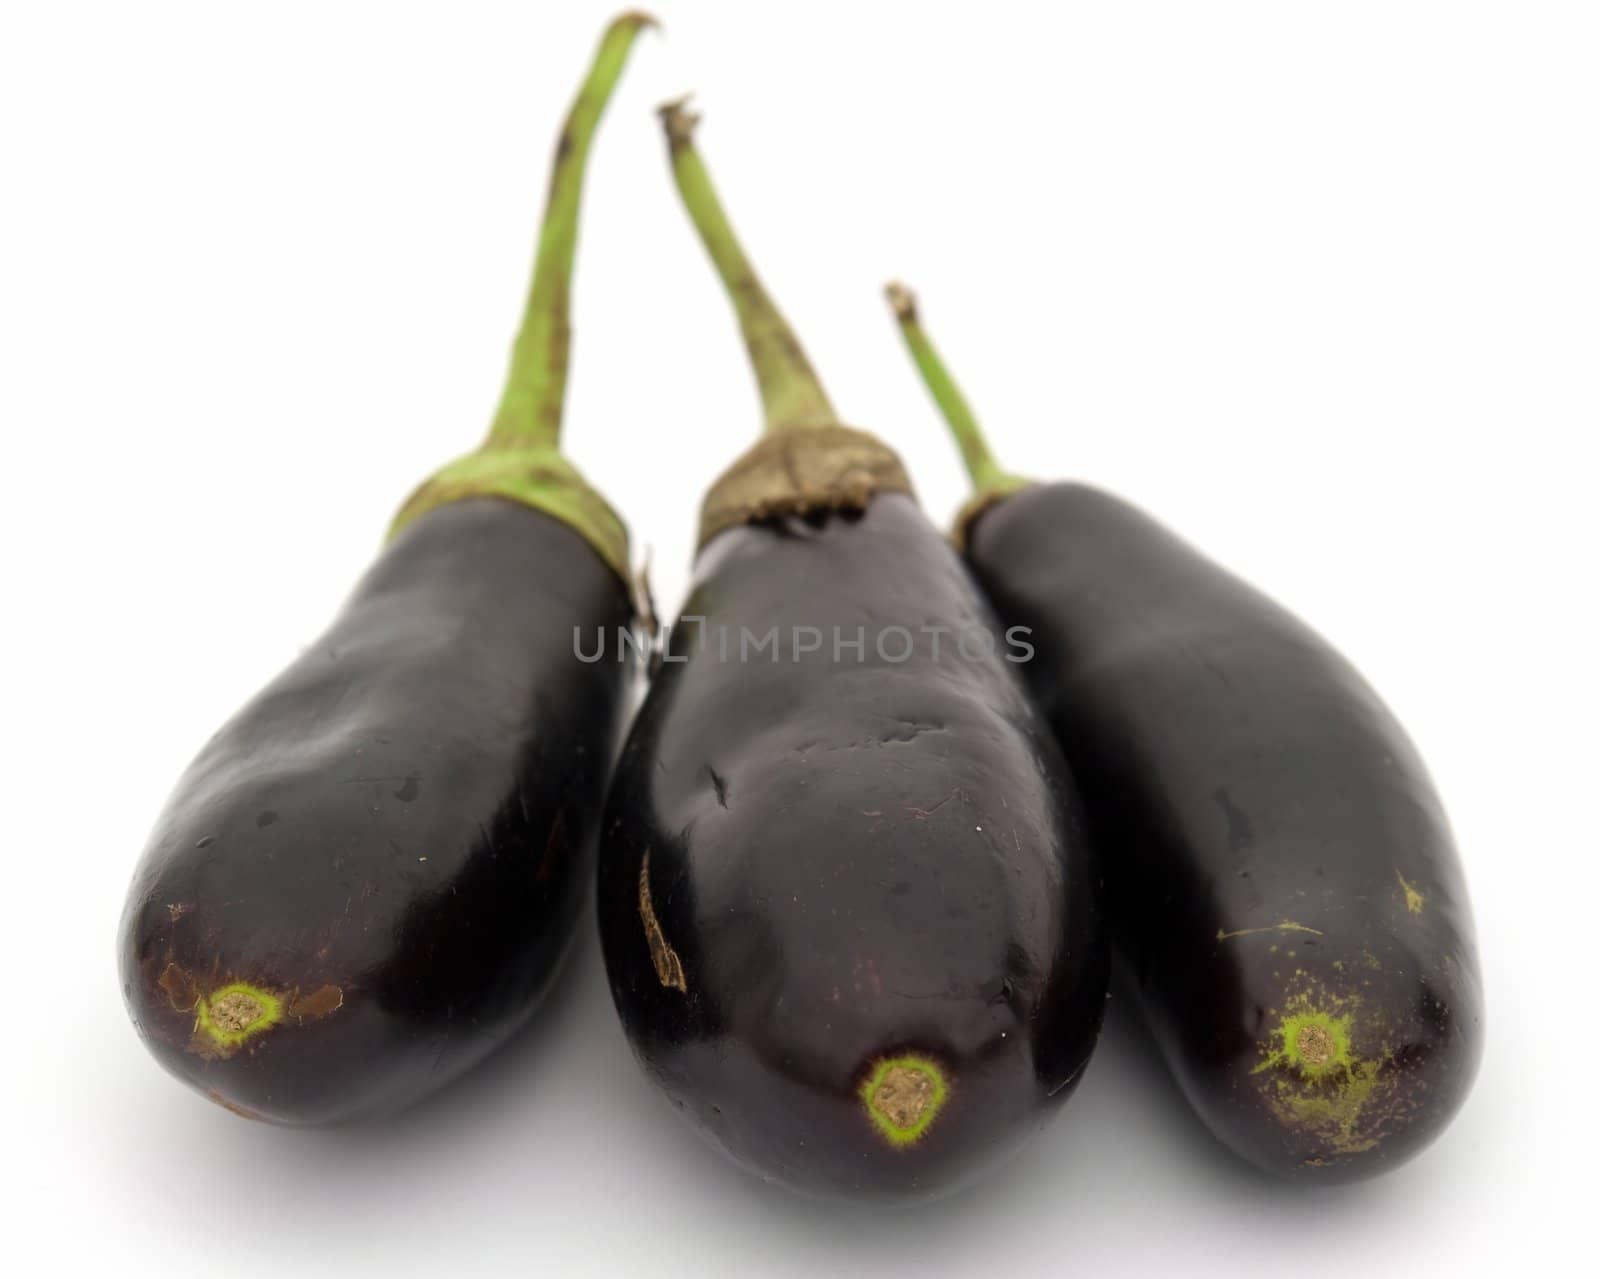 Three big eggplants on a white background.